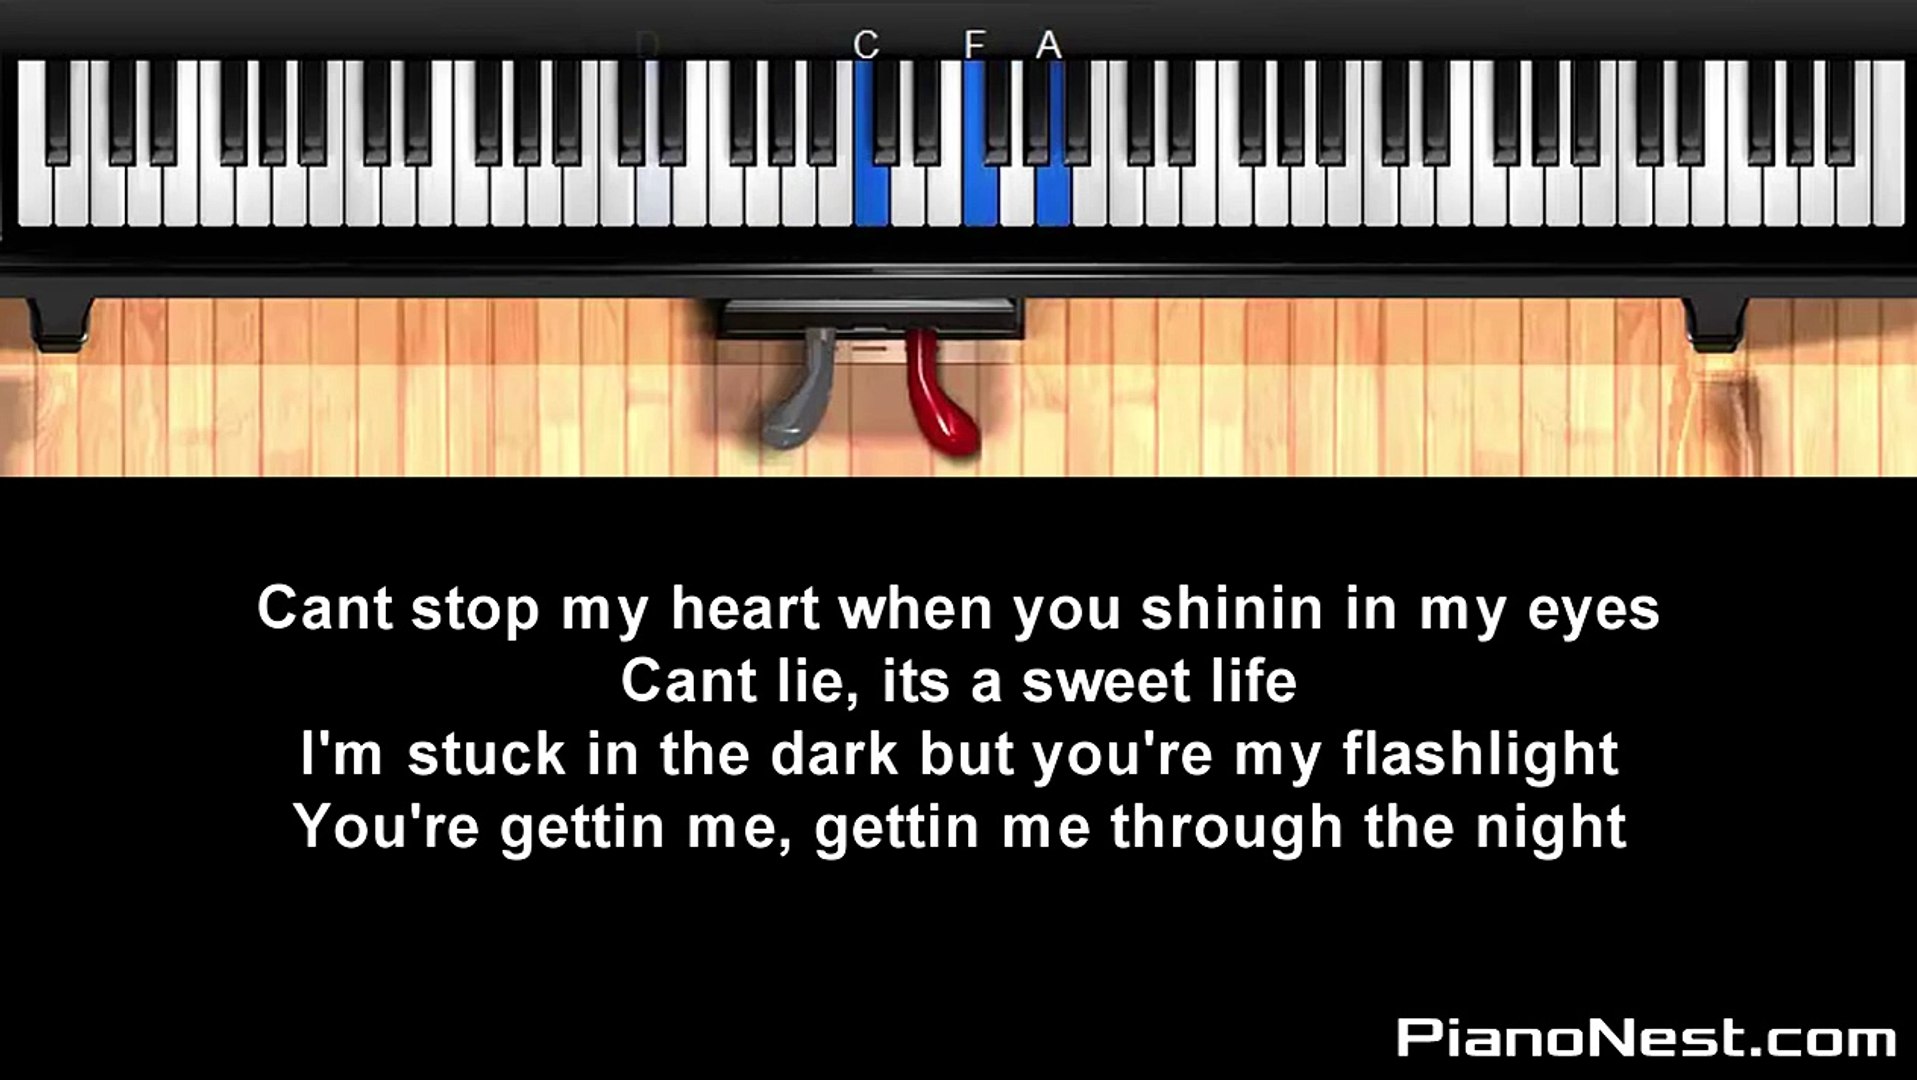 Jessie J - Flashlight - Piano Karaoke / Sing Along / Cover with Lyrics -  Pitch Perfect 2 - video Dailymotion